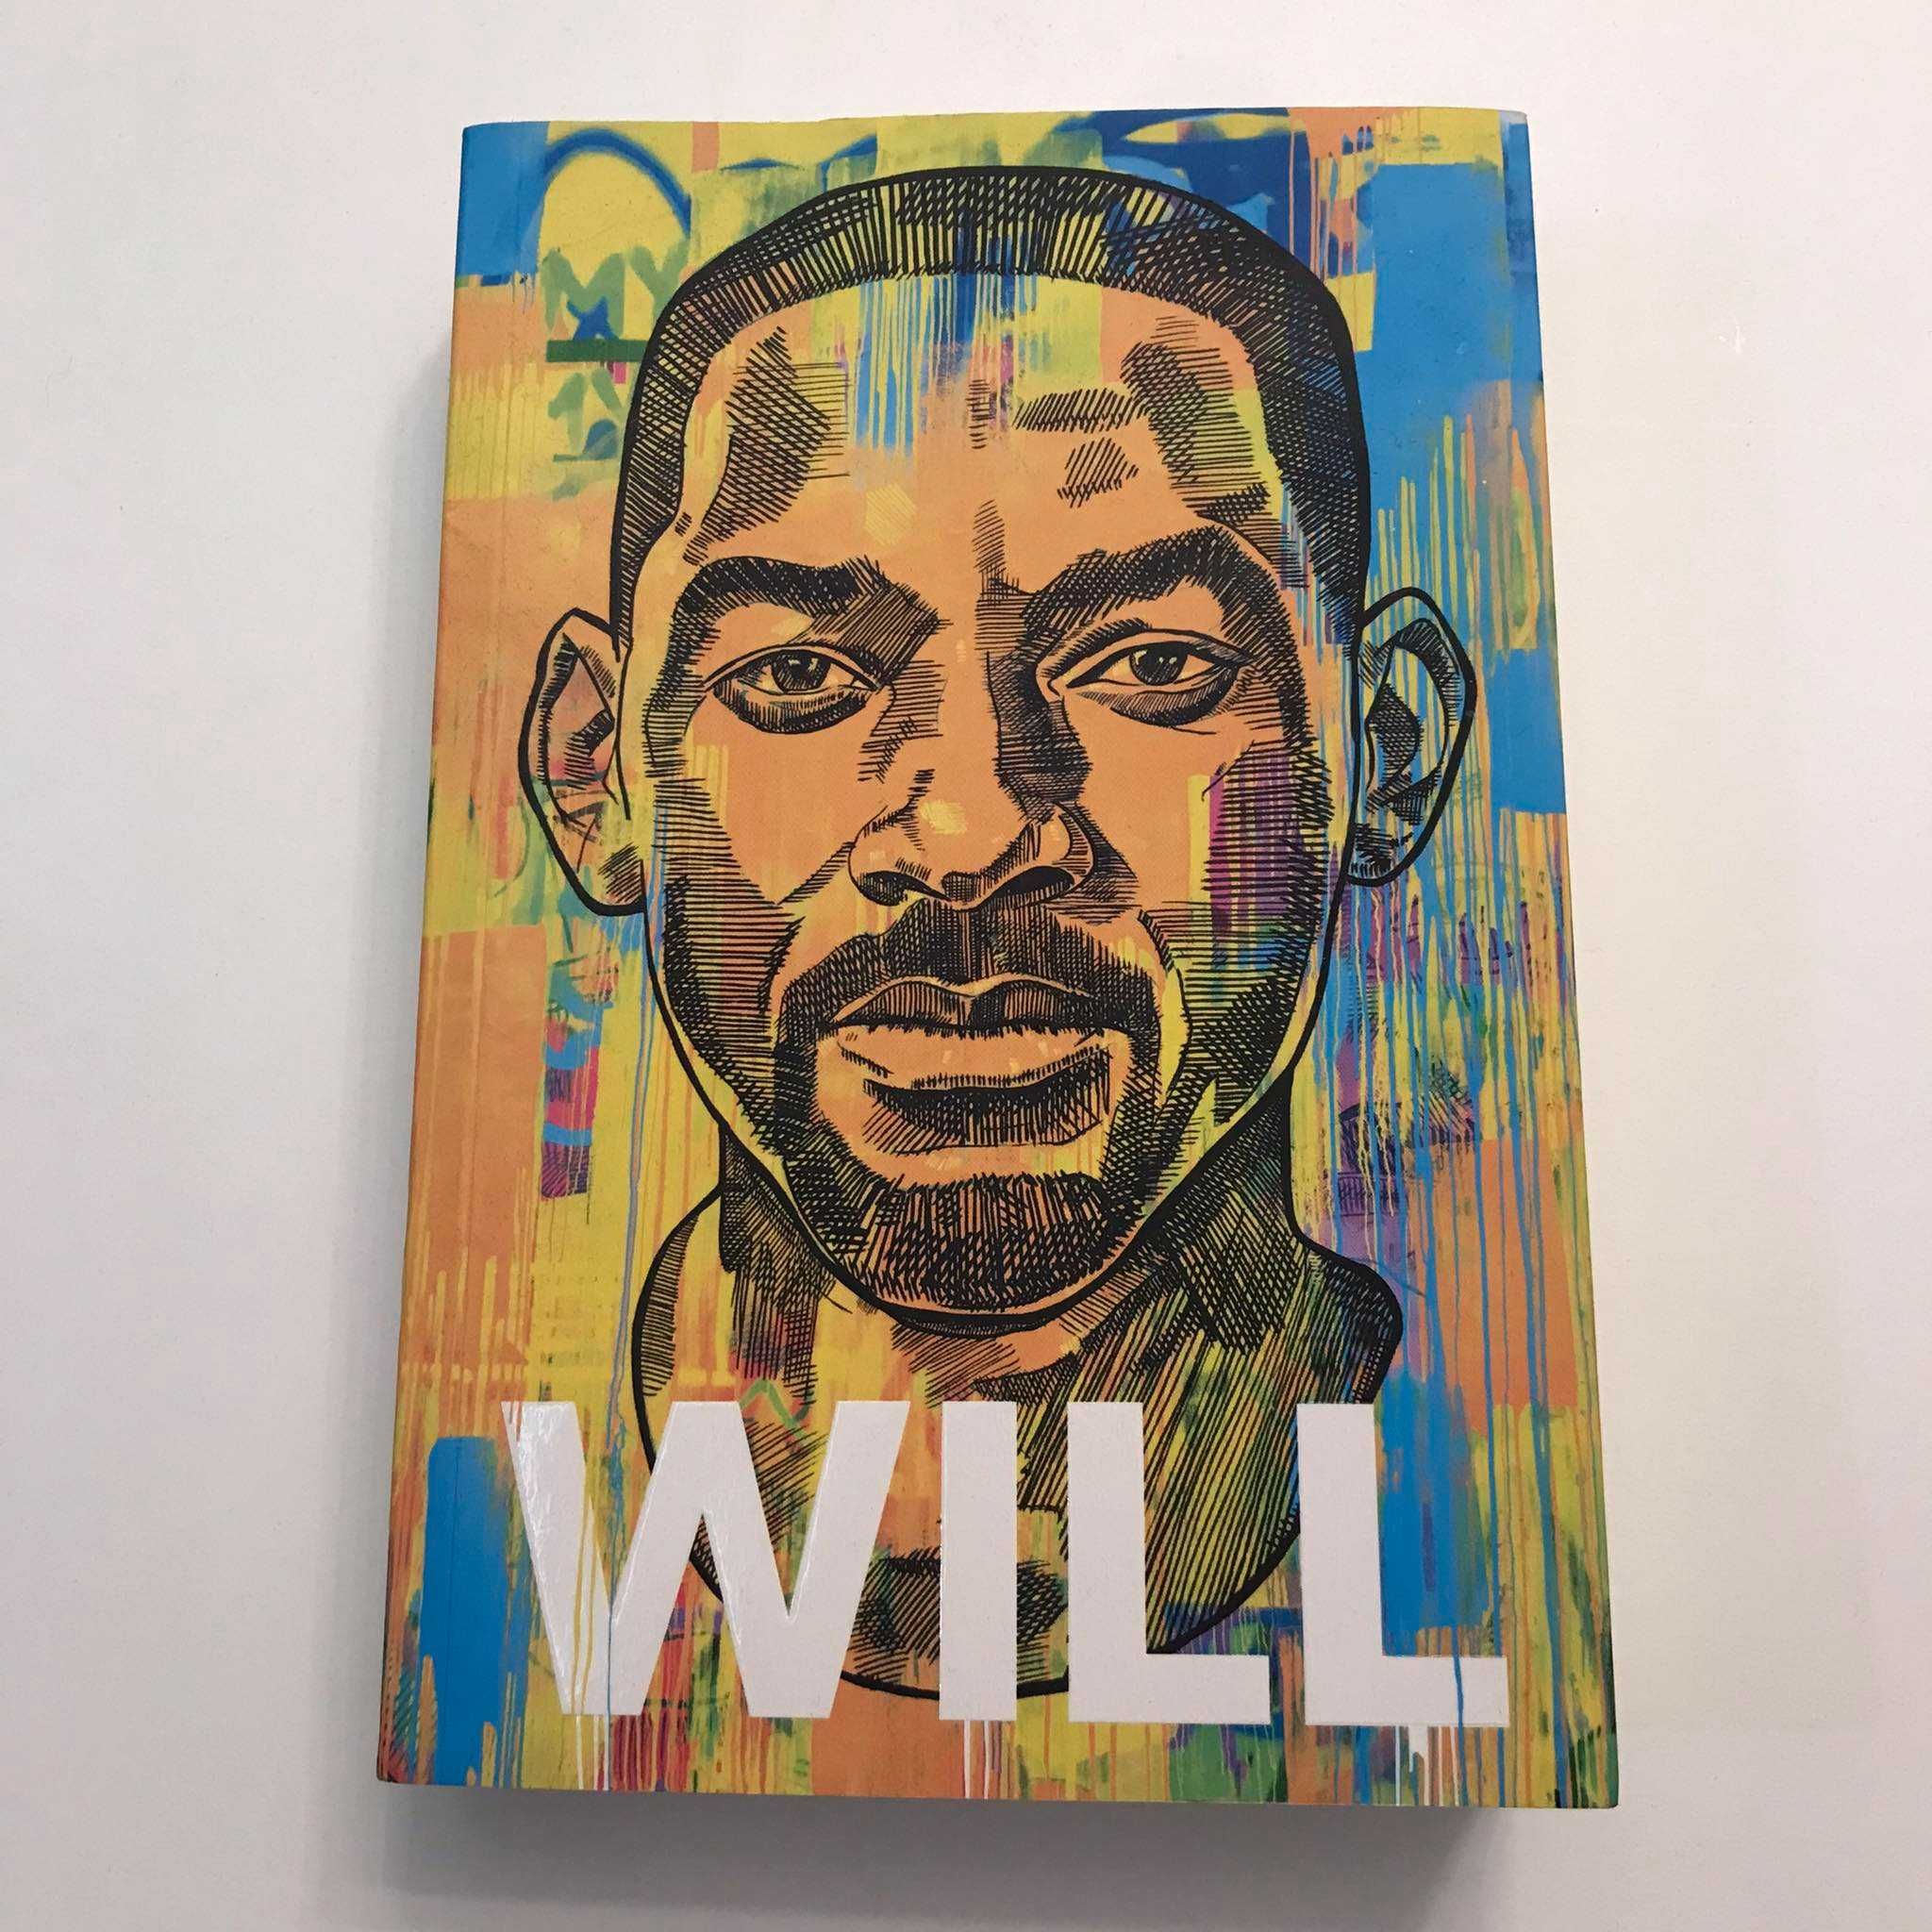 Will - Smith Will